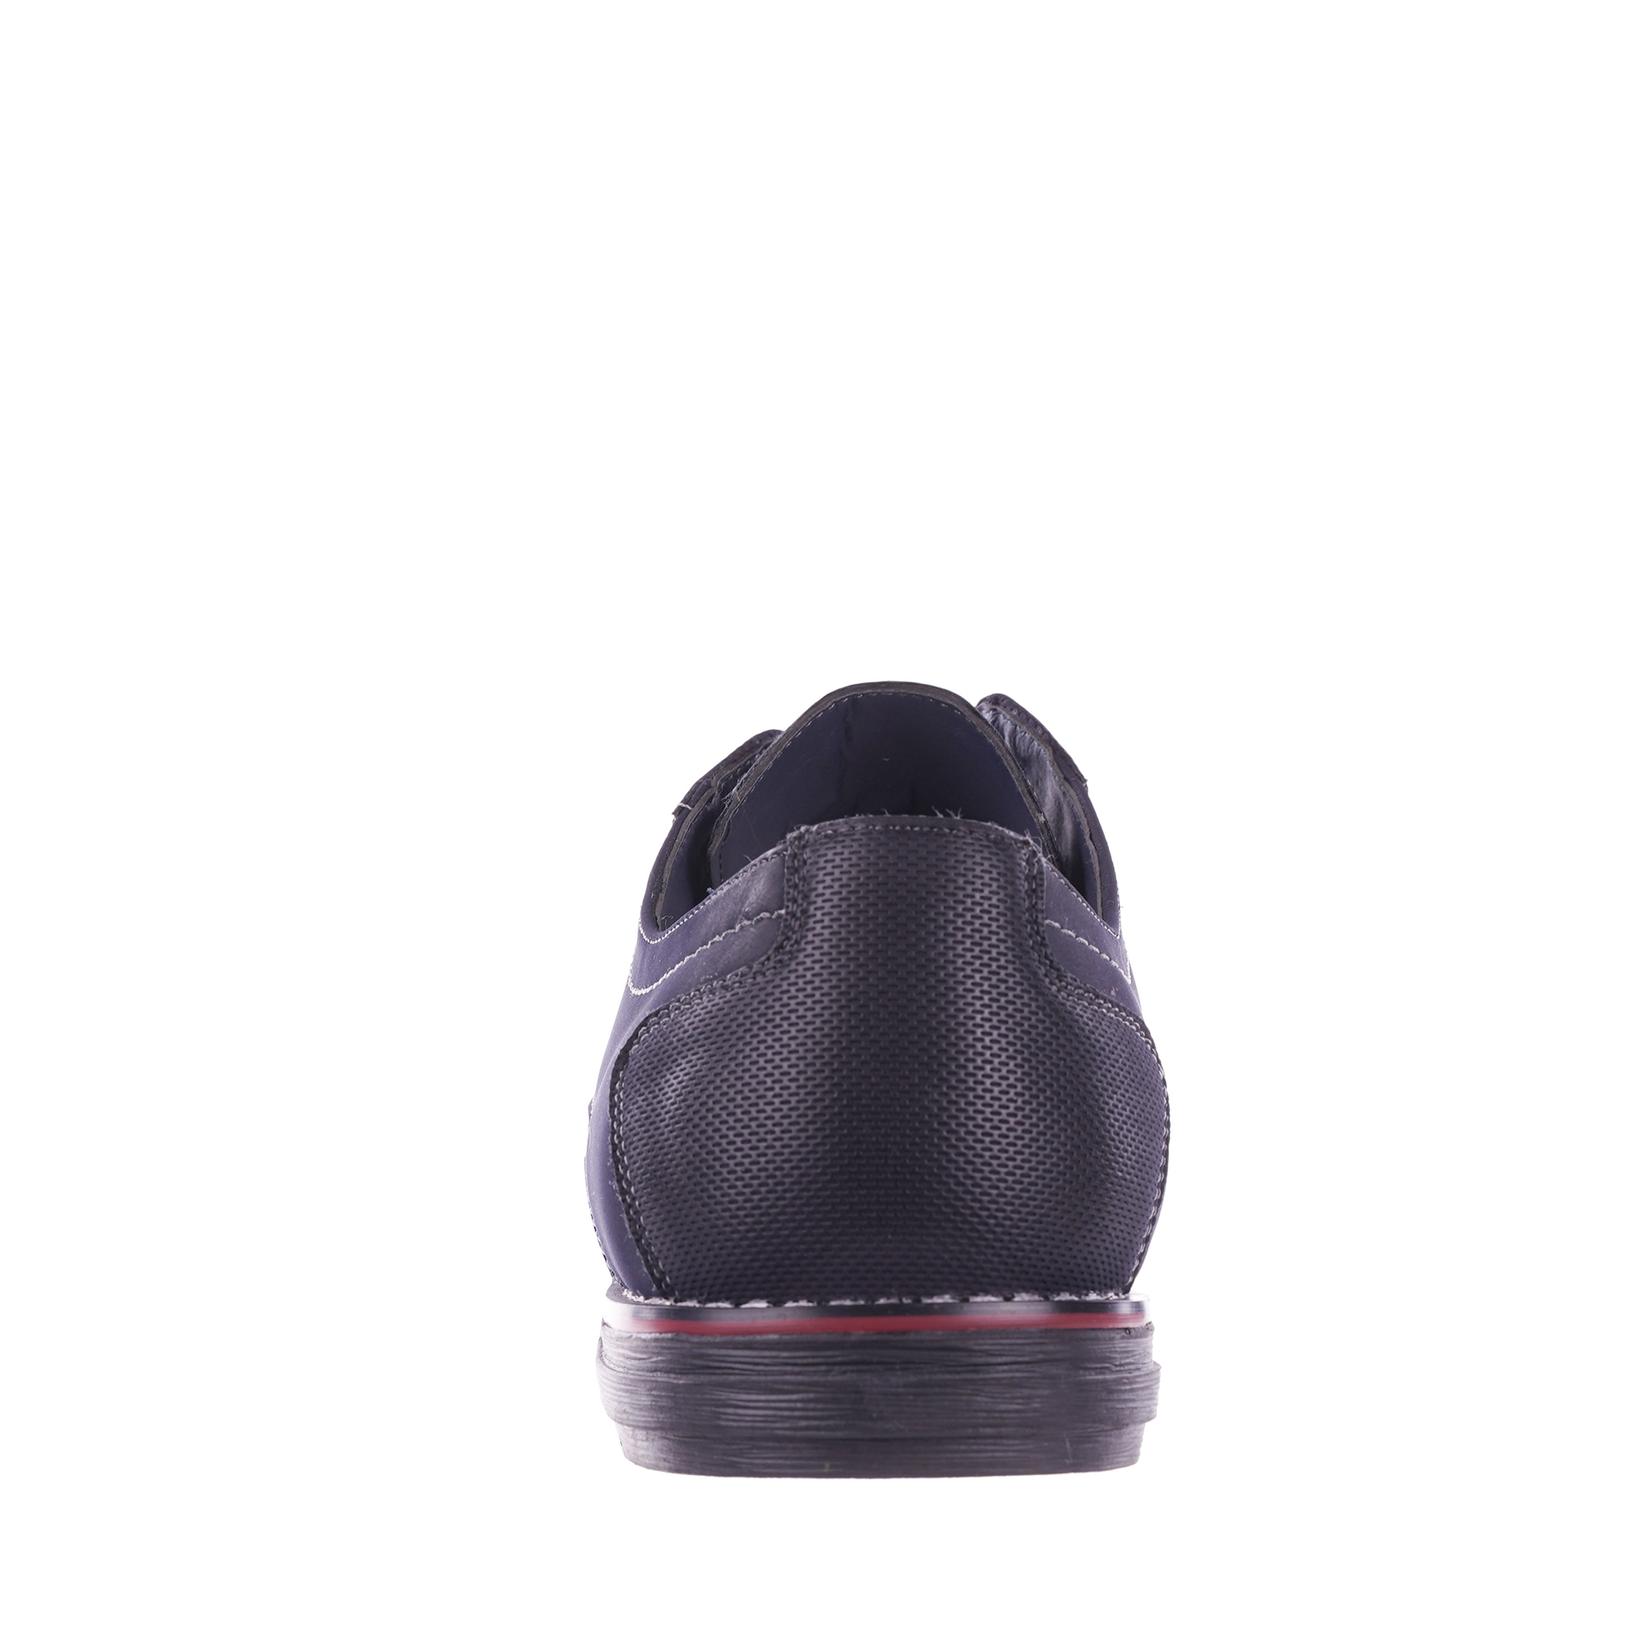 Selected image for DIFFERENTE Muške cipele N71601, Teget